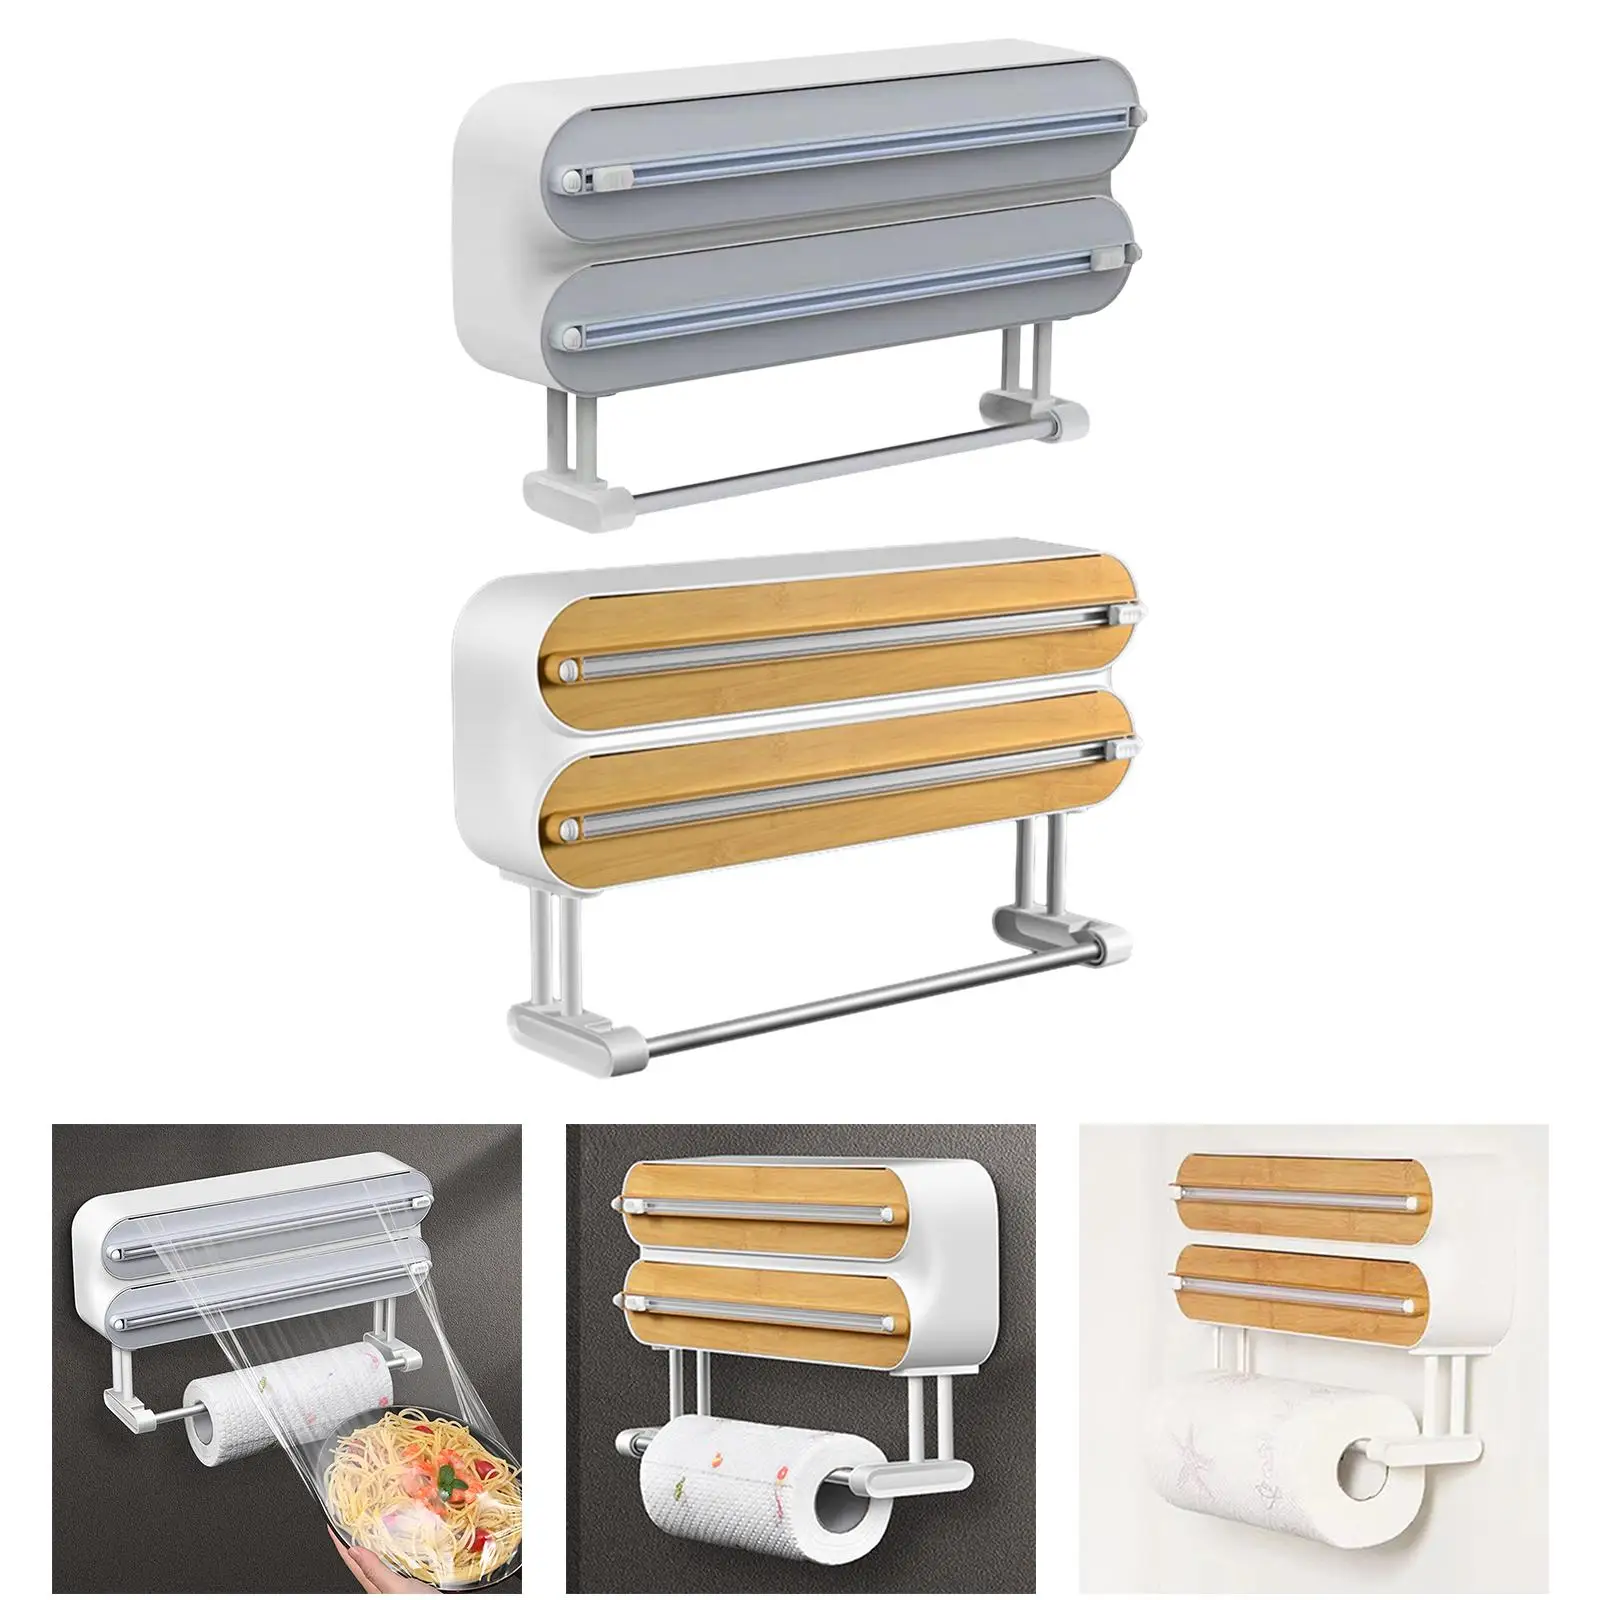 Cling Film Dispenser Slide Cutter Food Wrap Cutter Kitchen Roll Paper Holder for Kitchen Fridge Desktop Baking Household